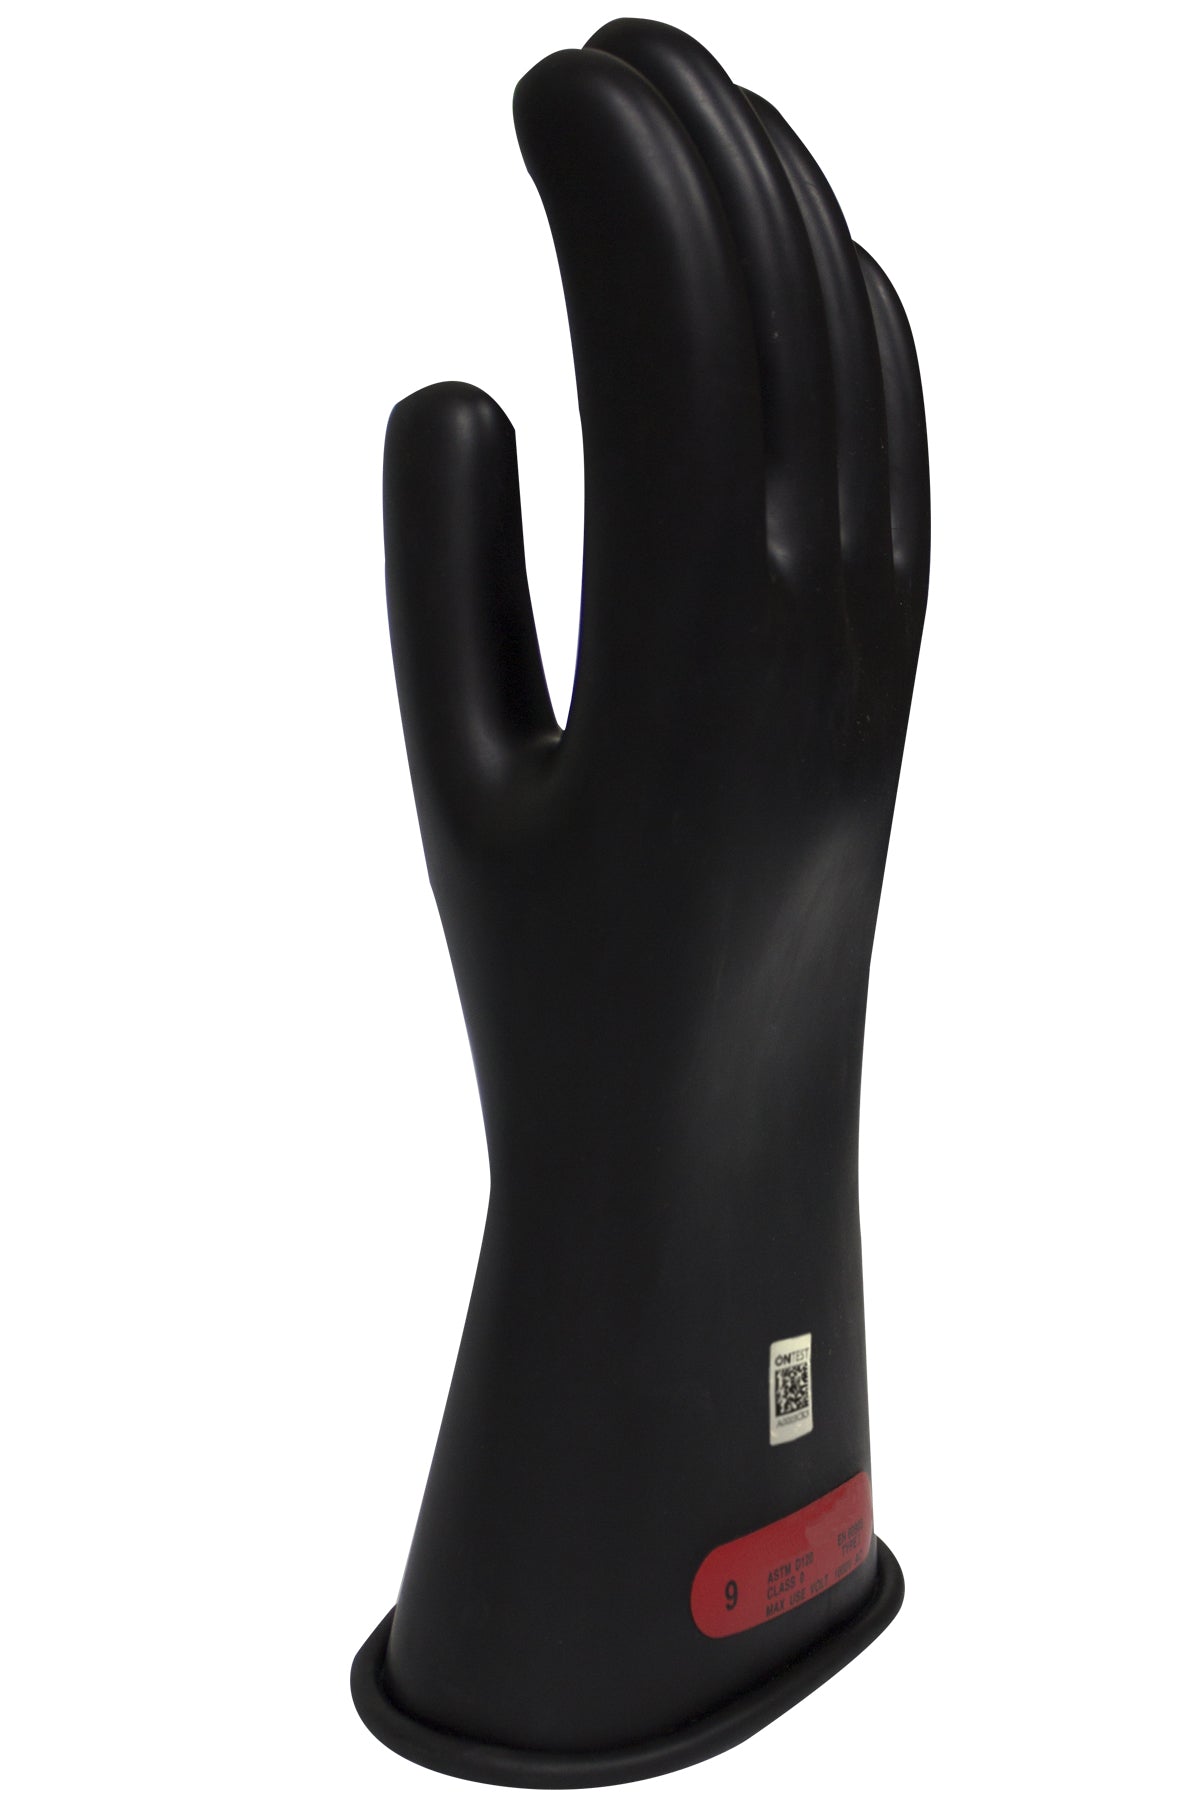 Class 0 ArcGuard Rubber Voltage Gloves